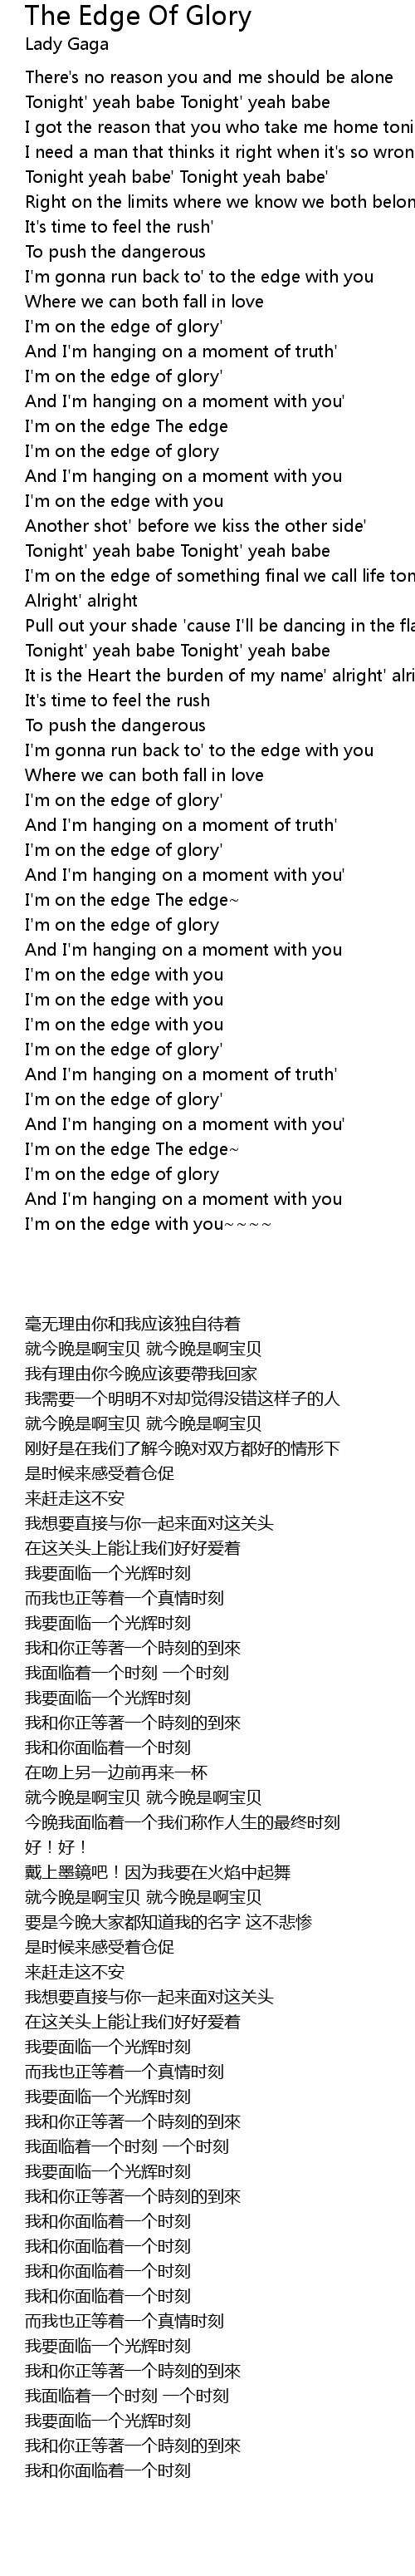 The Edge Of Glory Lyrics Follow Lyrics